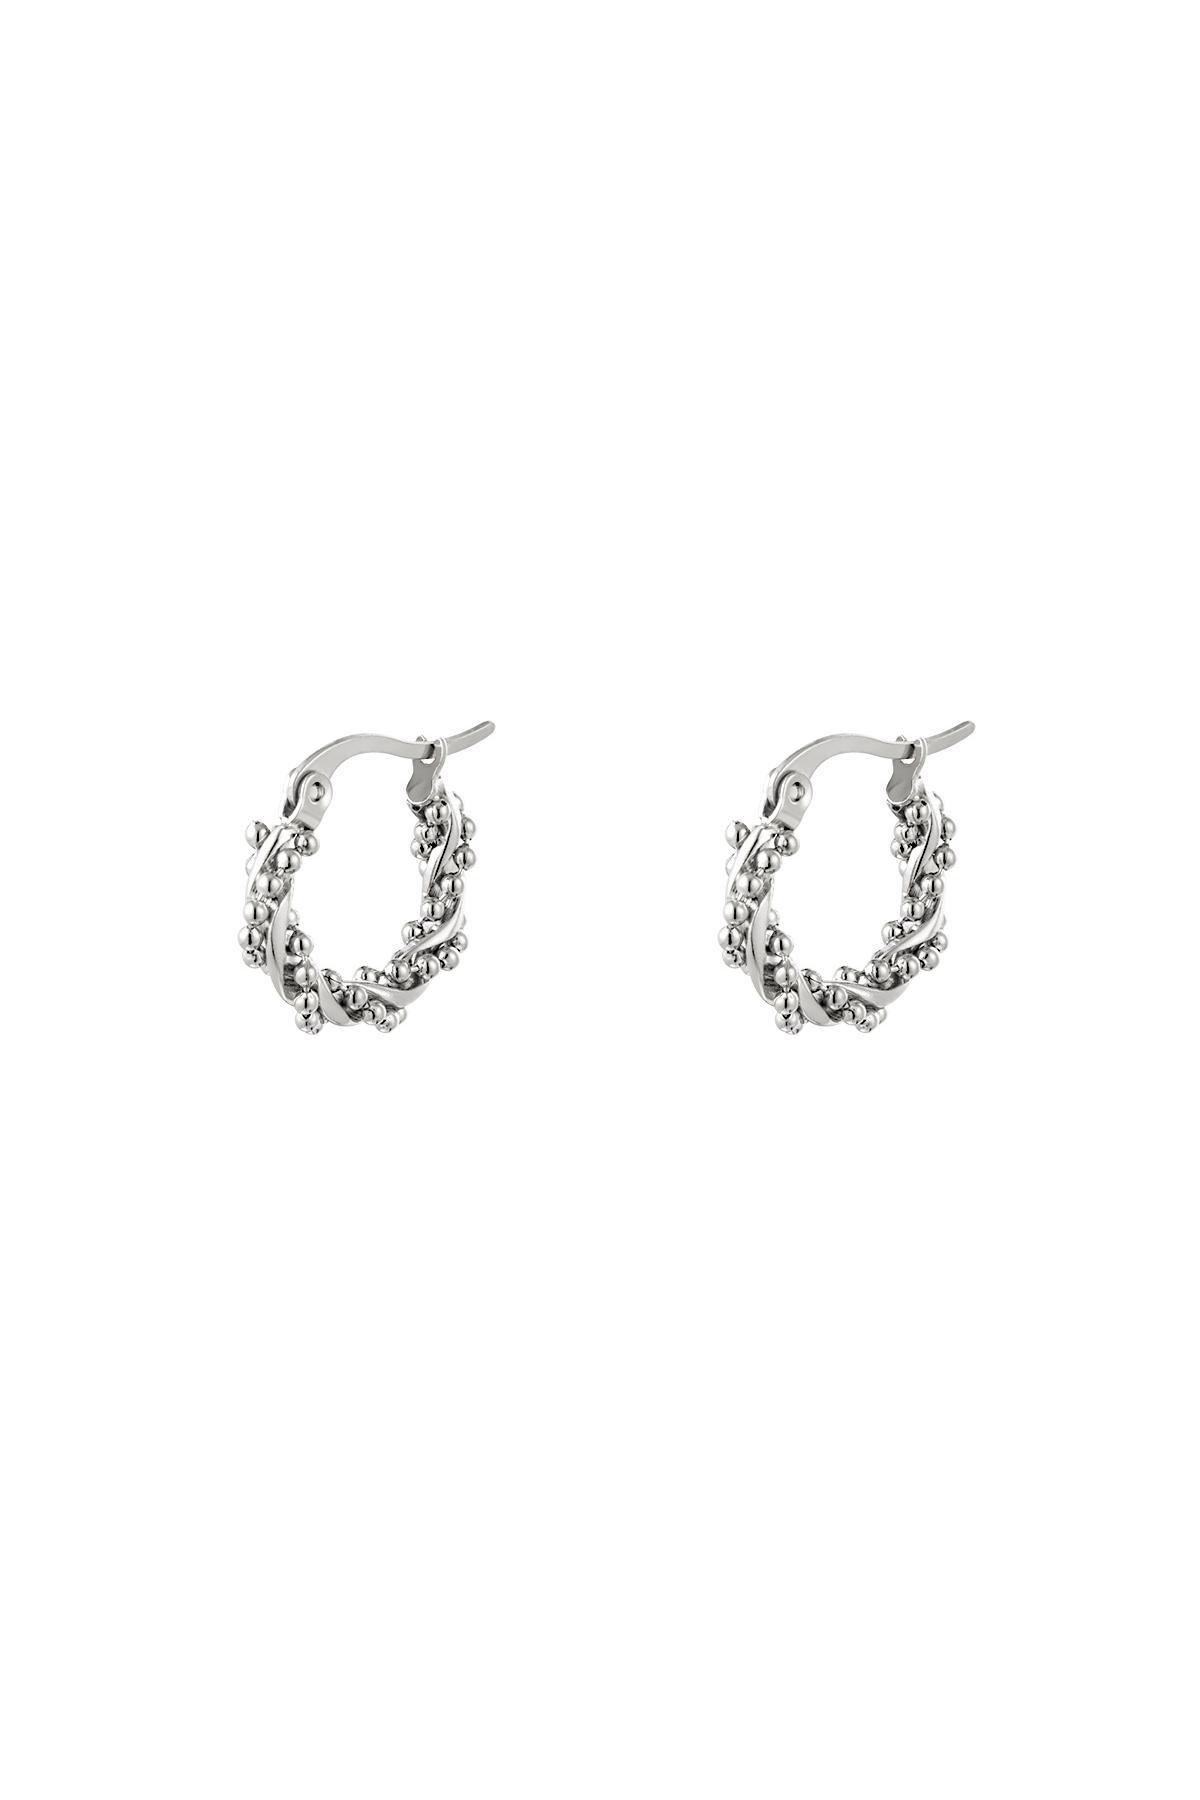 Hoop Earrings Multiple Twisted Pearls Small Silver Stainless Steel